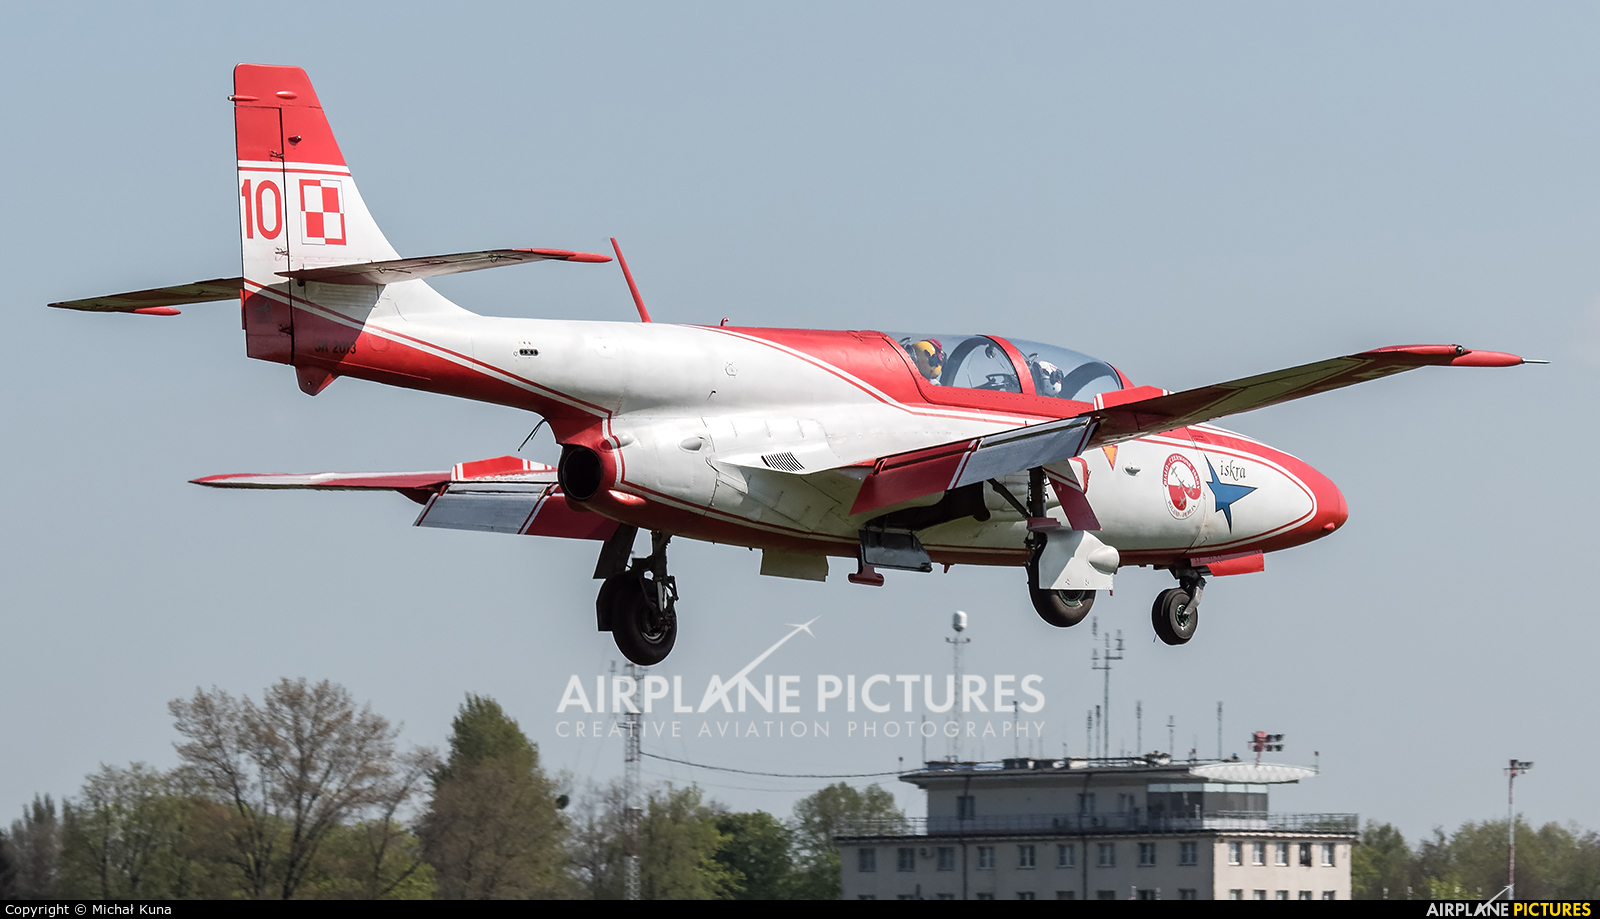 Poland - Air Force: White & Red Iskras 3H-2013 aircraft at Malbork